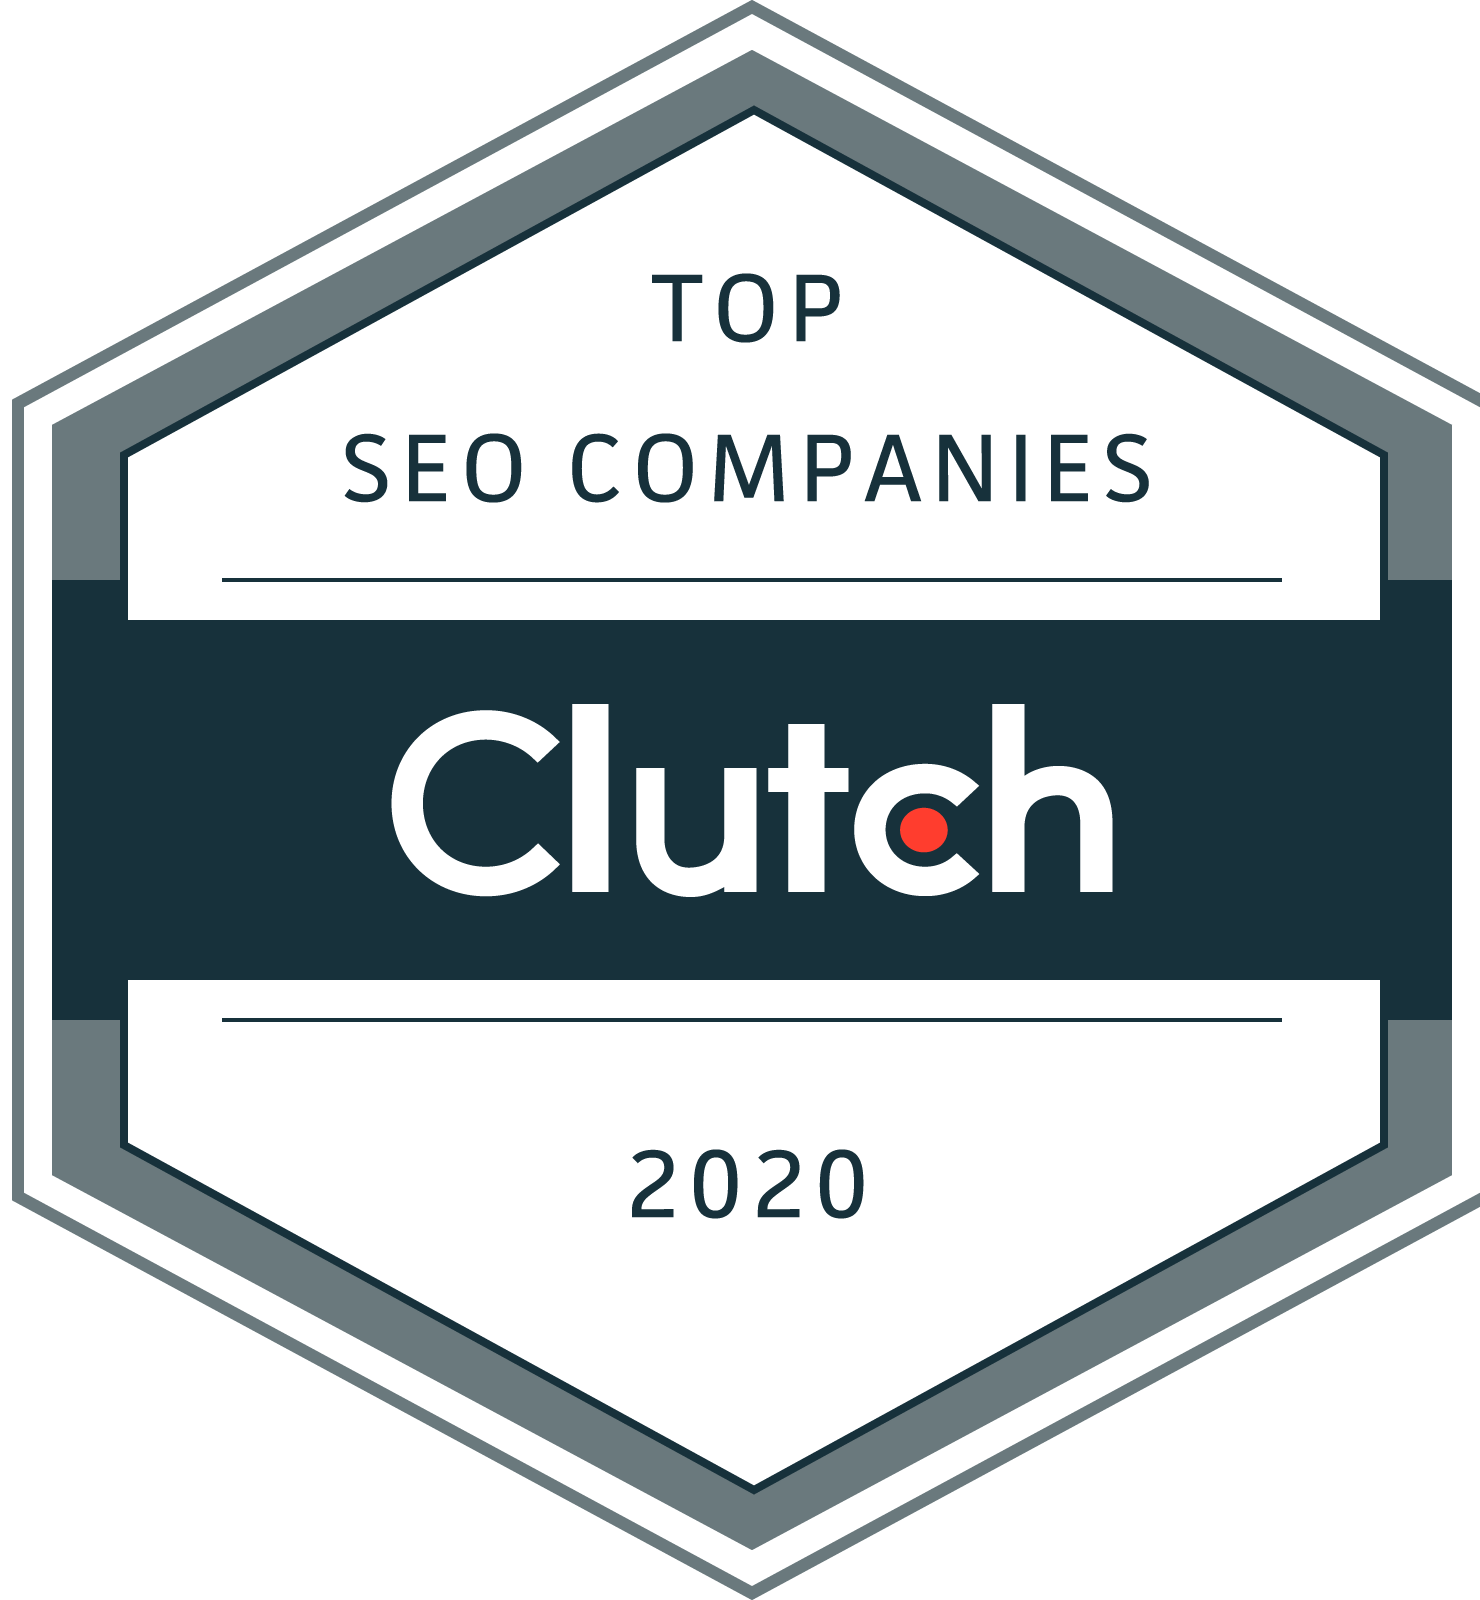 Clutch Top SEO Companies